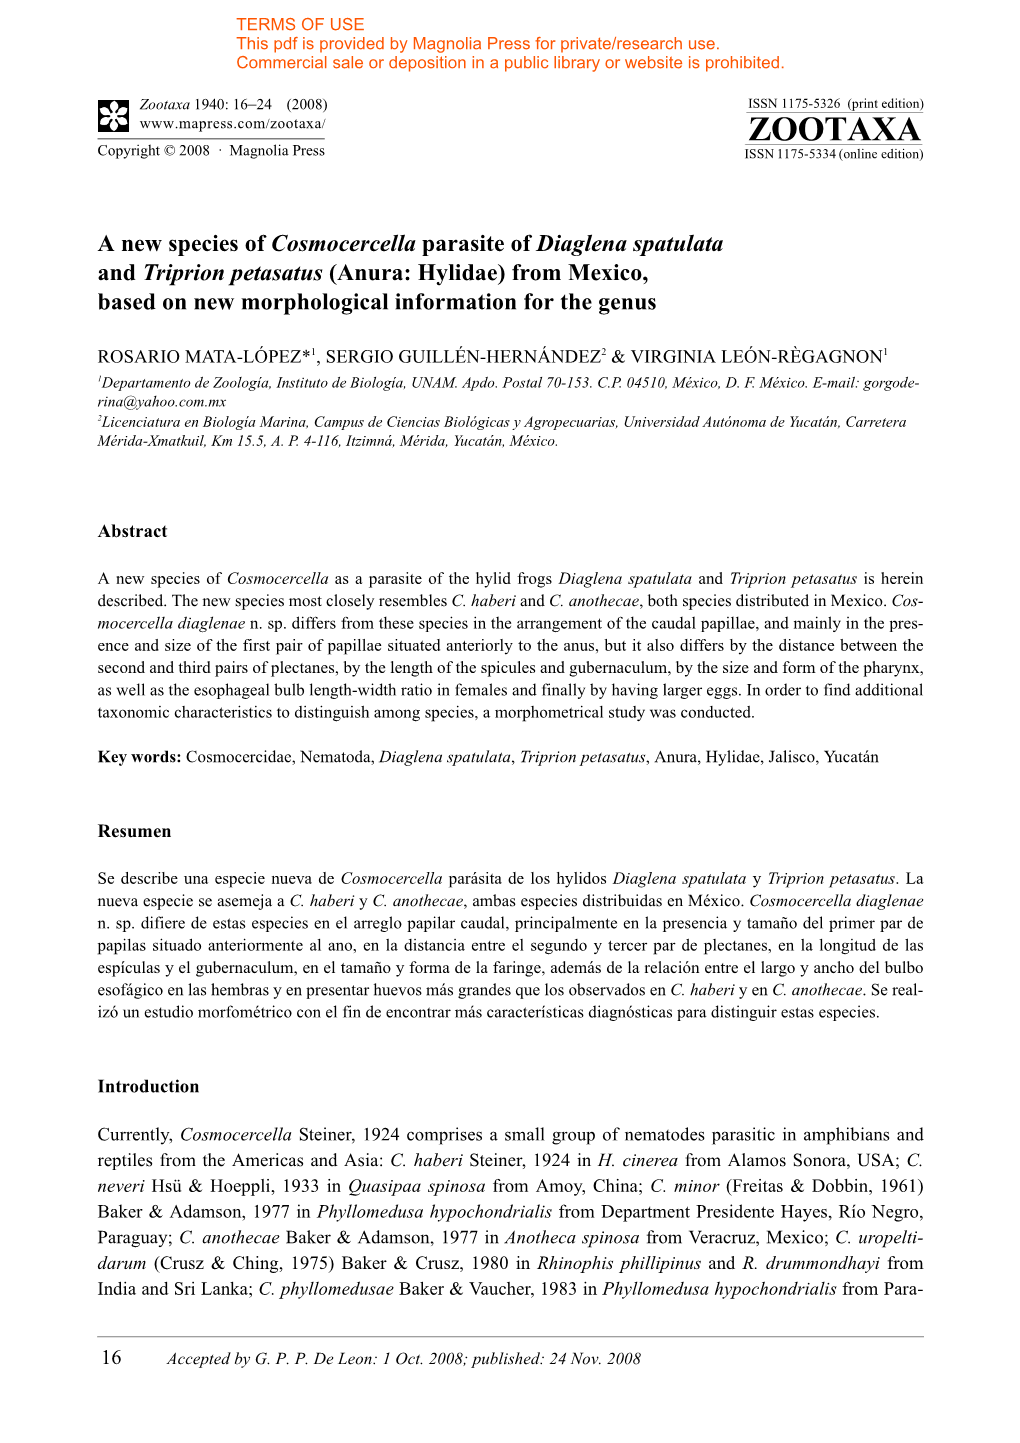 Zootaxa, a New Species of Cosmocercella Parasite of Diaglena Spatulata